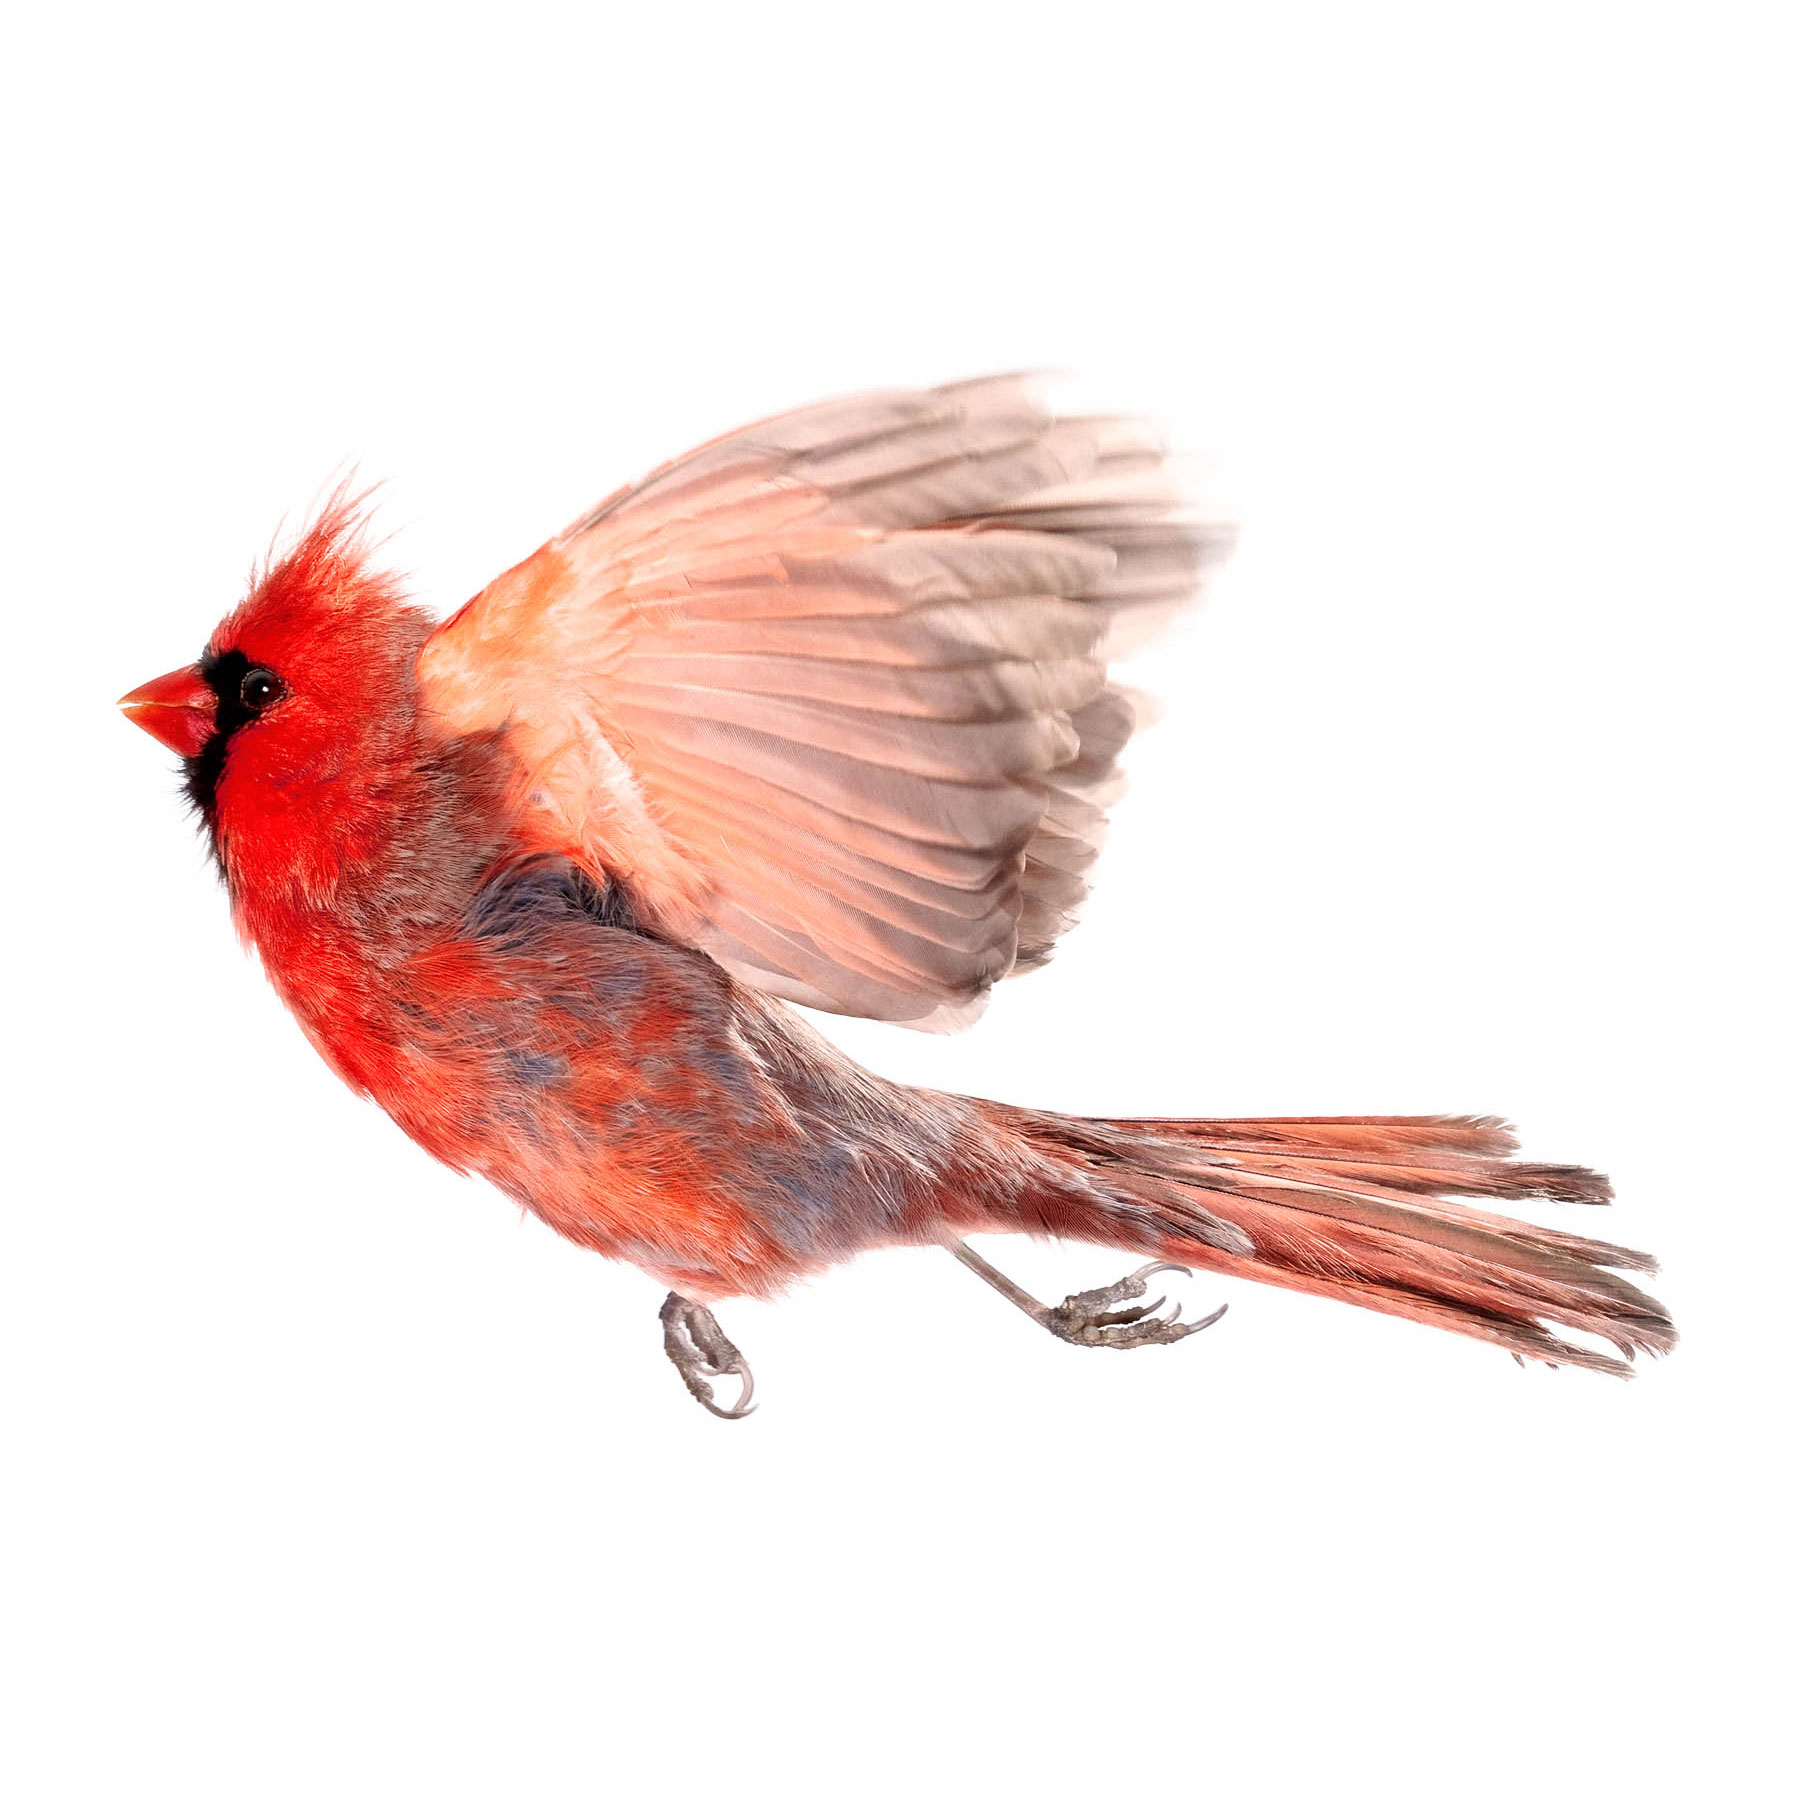 Northern Cardinal 001 Art Print Wild Birds Flying